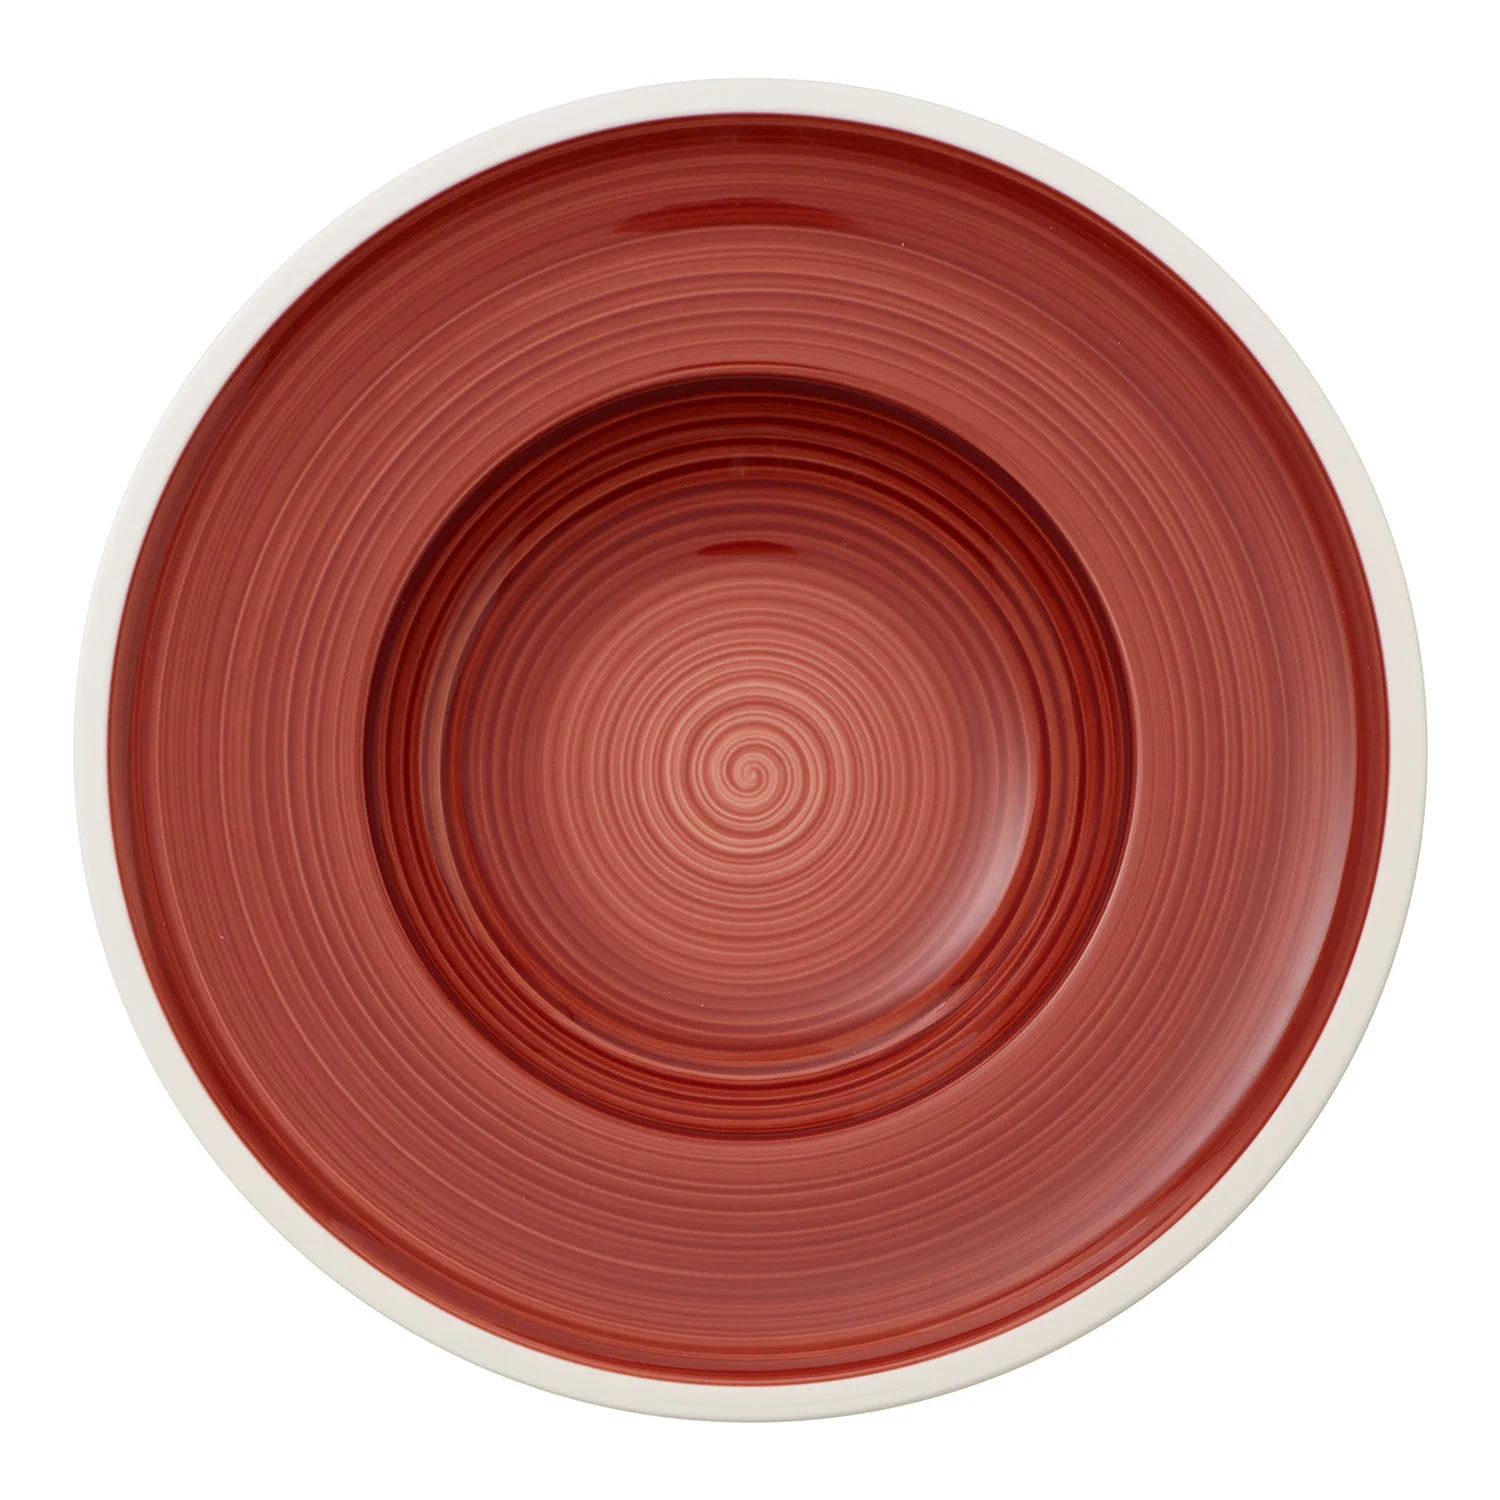 Manufacture Rouge Глубокая тарелка 25 см